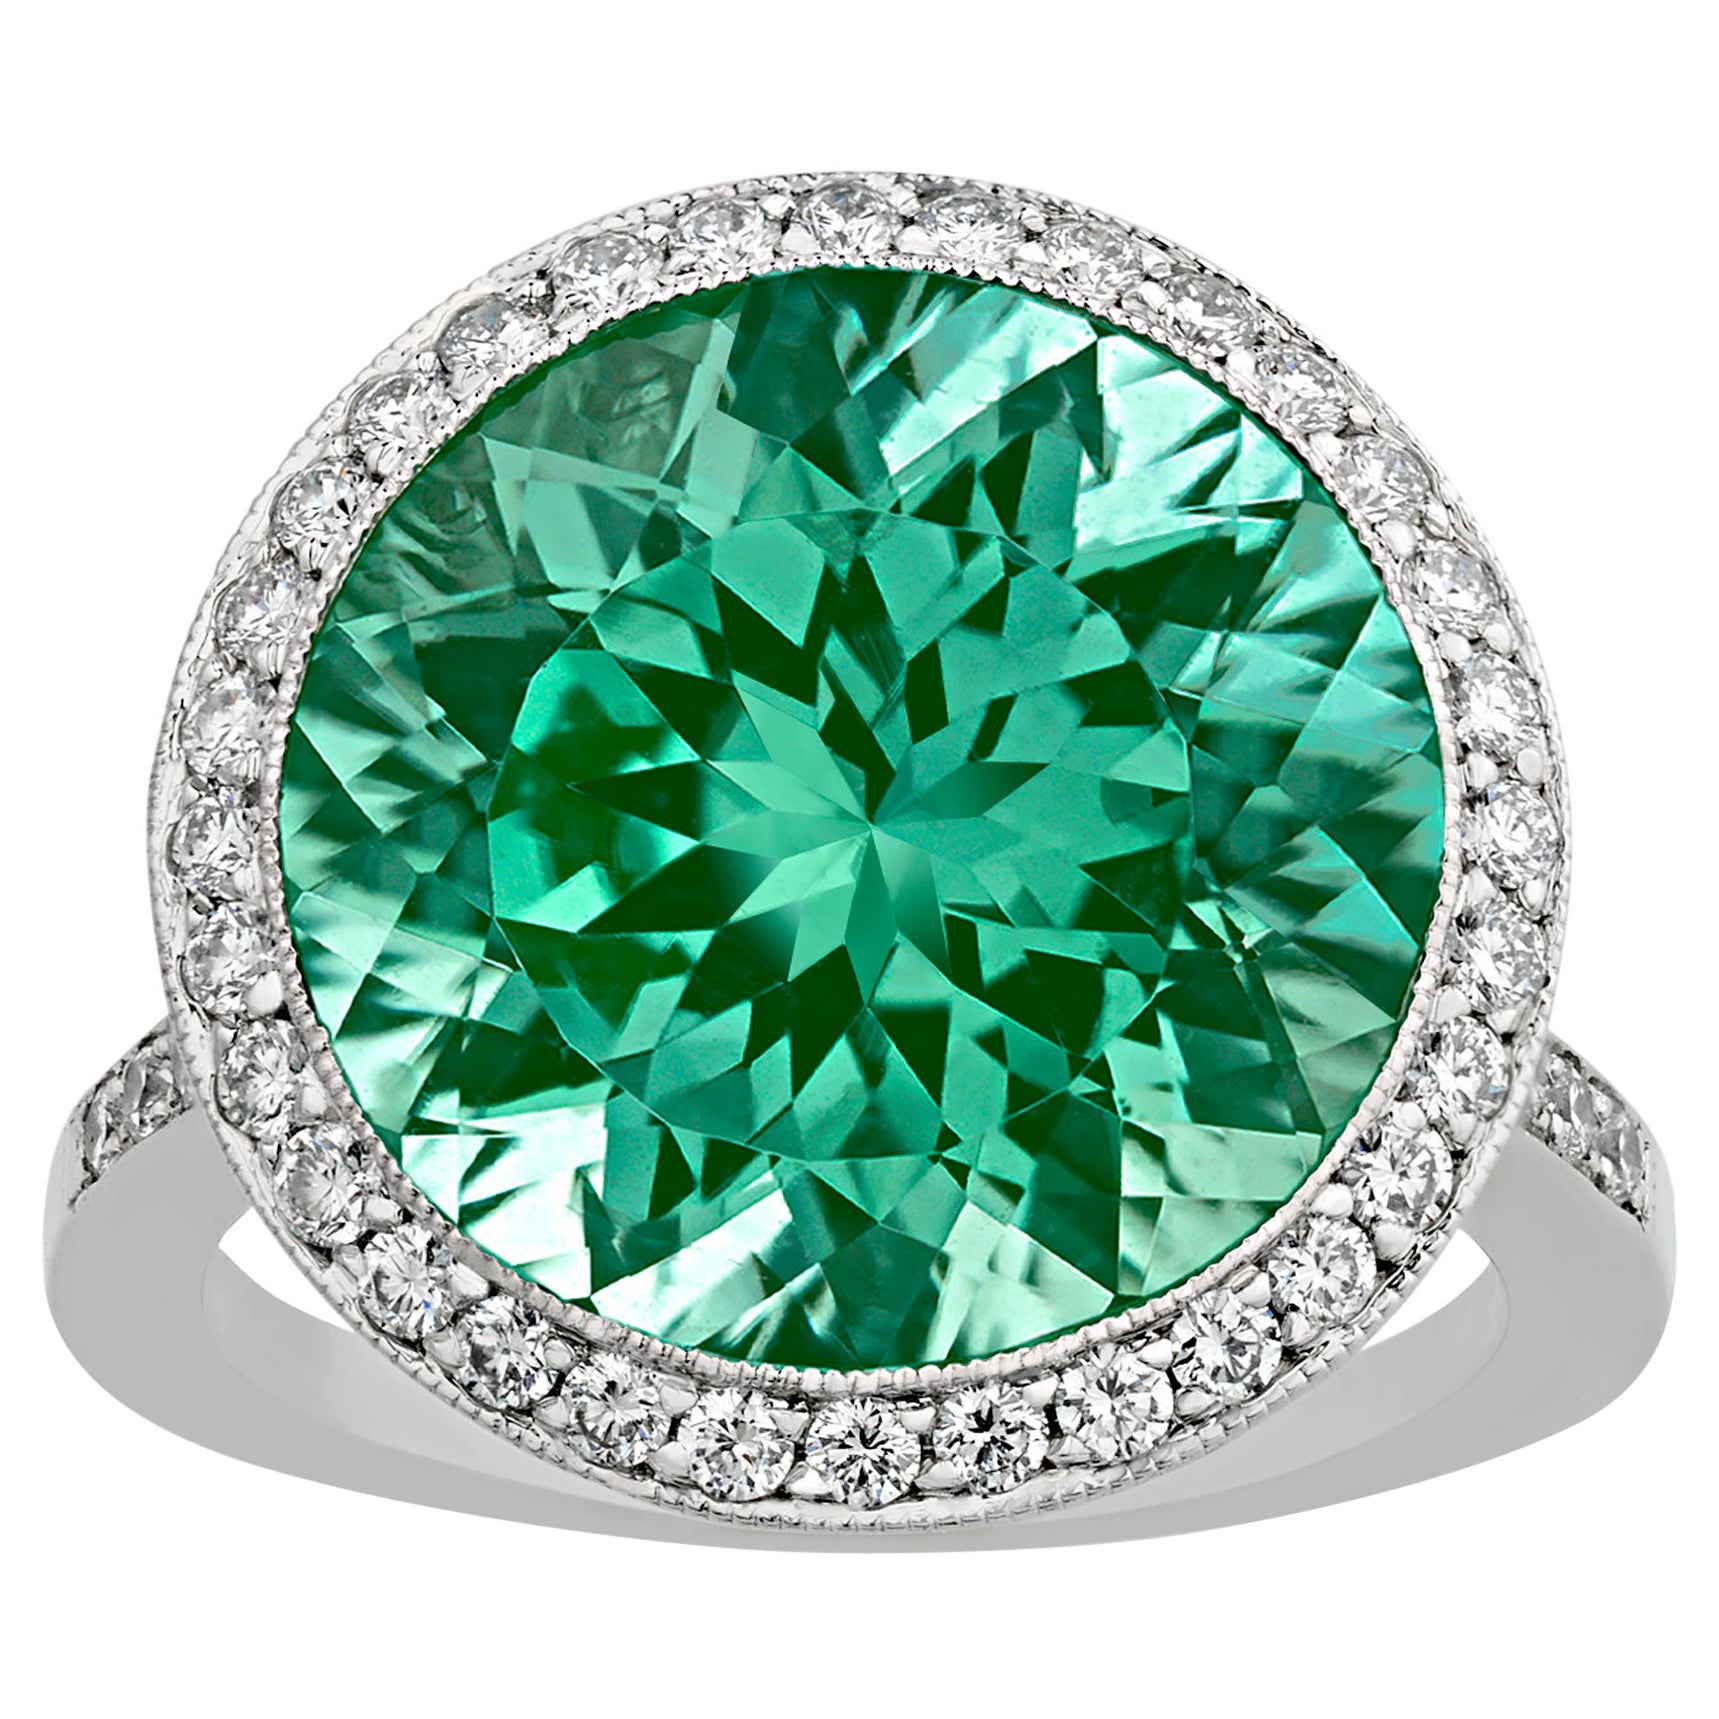 Green Tourmaline Ring by Tiffany & Co., 8.73 Carats